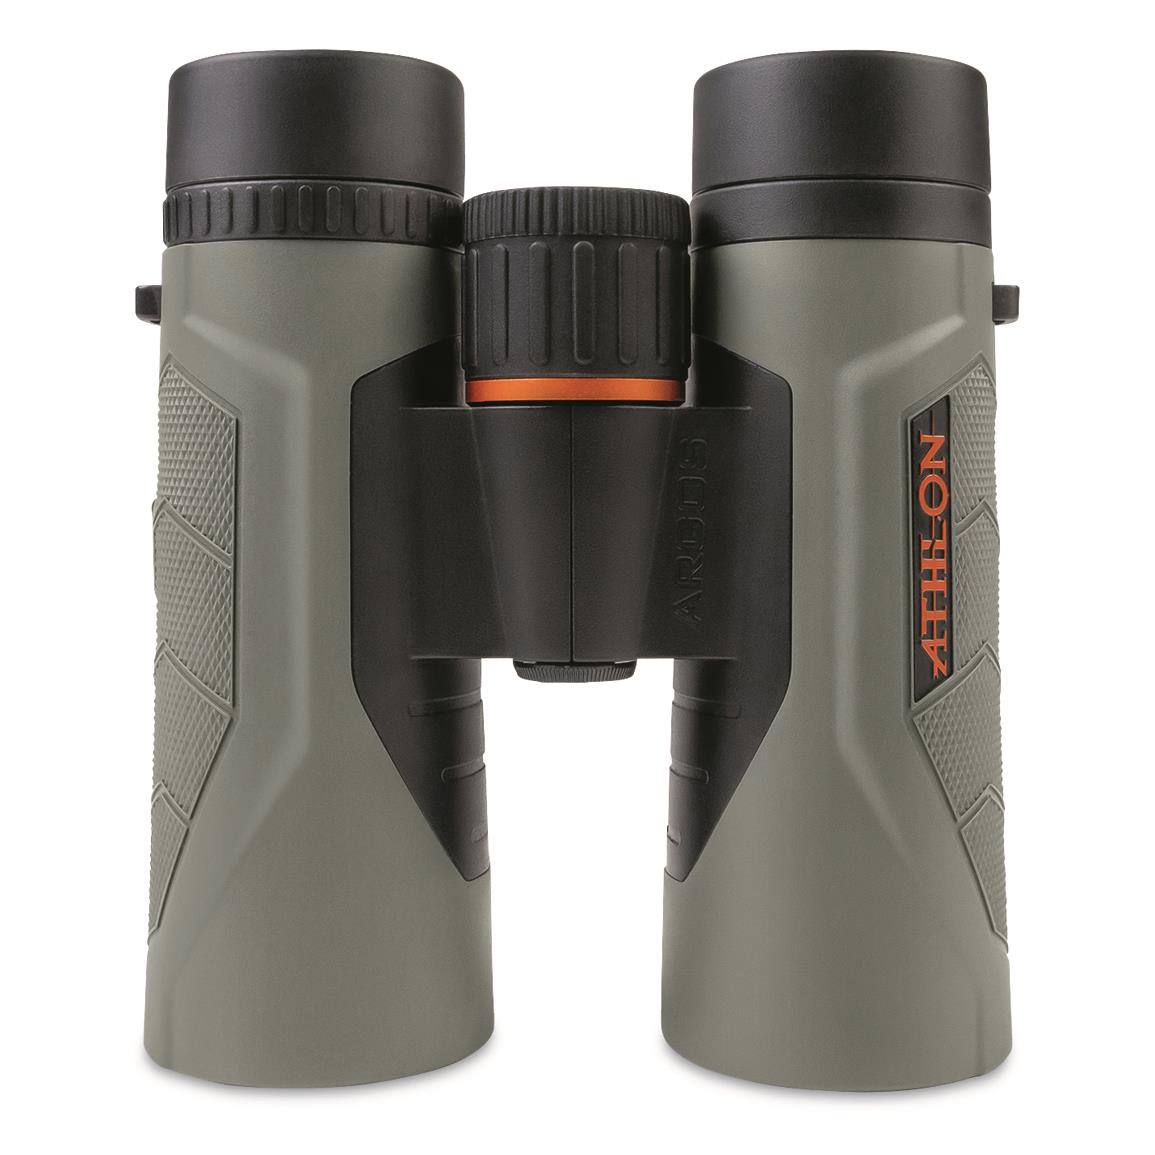 Athlon Argos G2 HD 10x42mm Binoculars